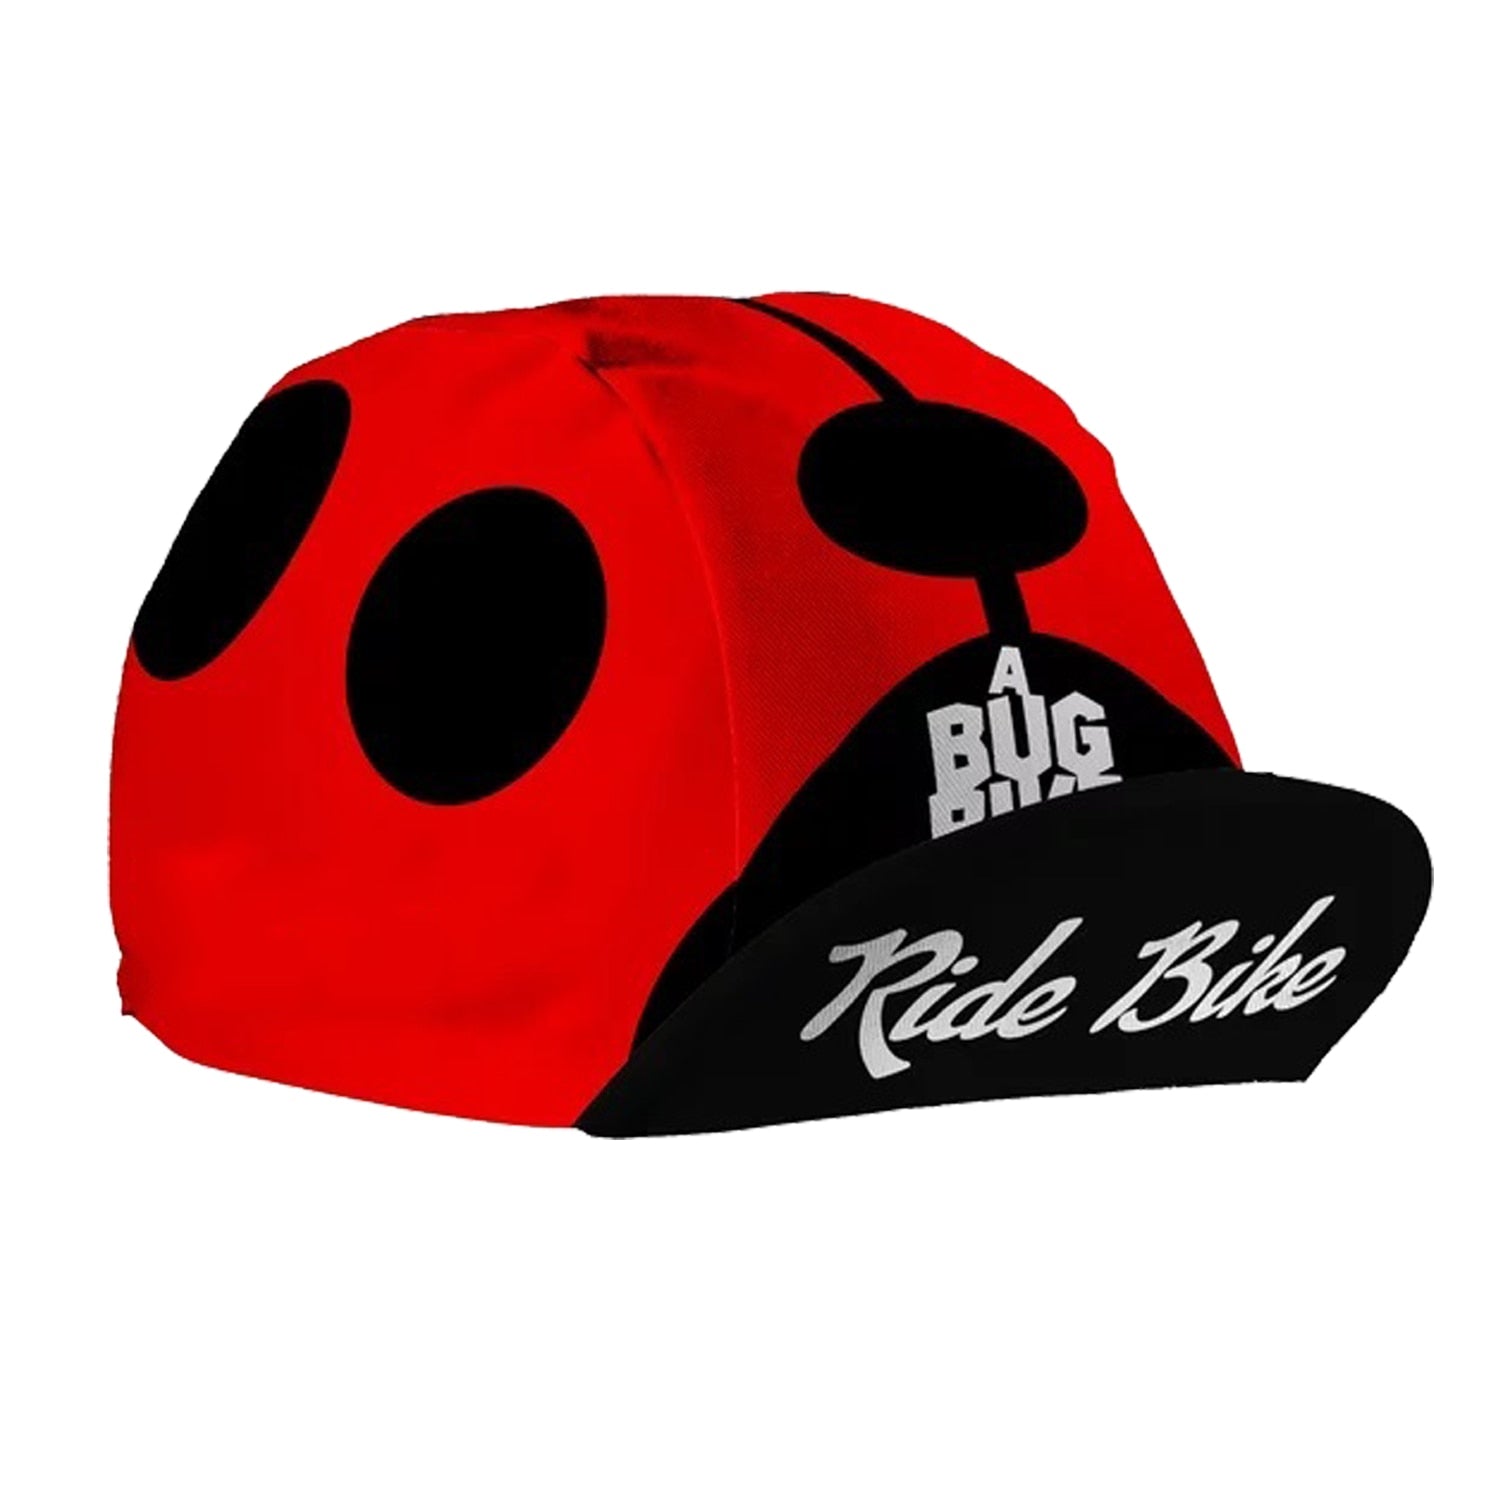 A BUG RED Retro CYCLING CAP